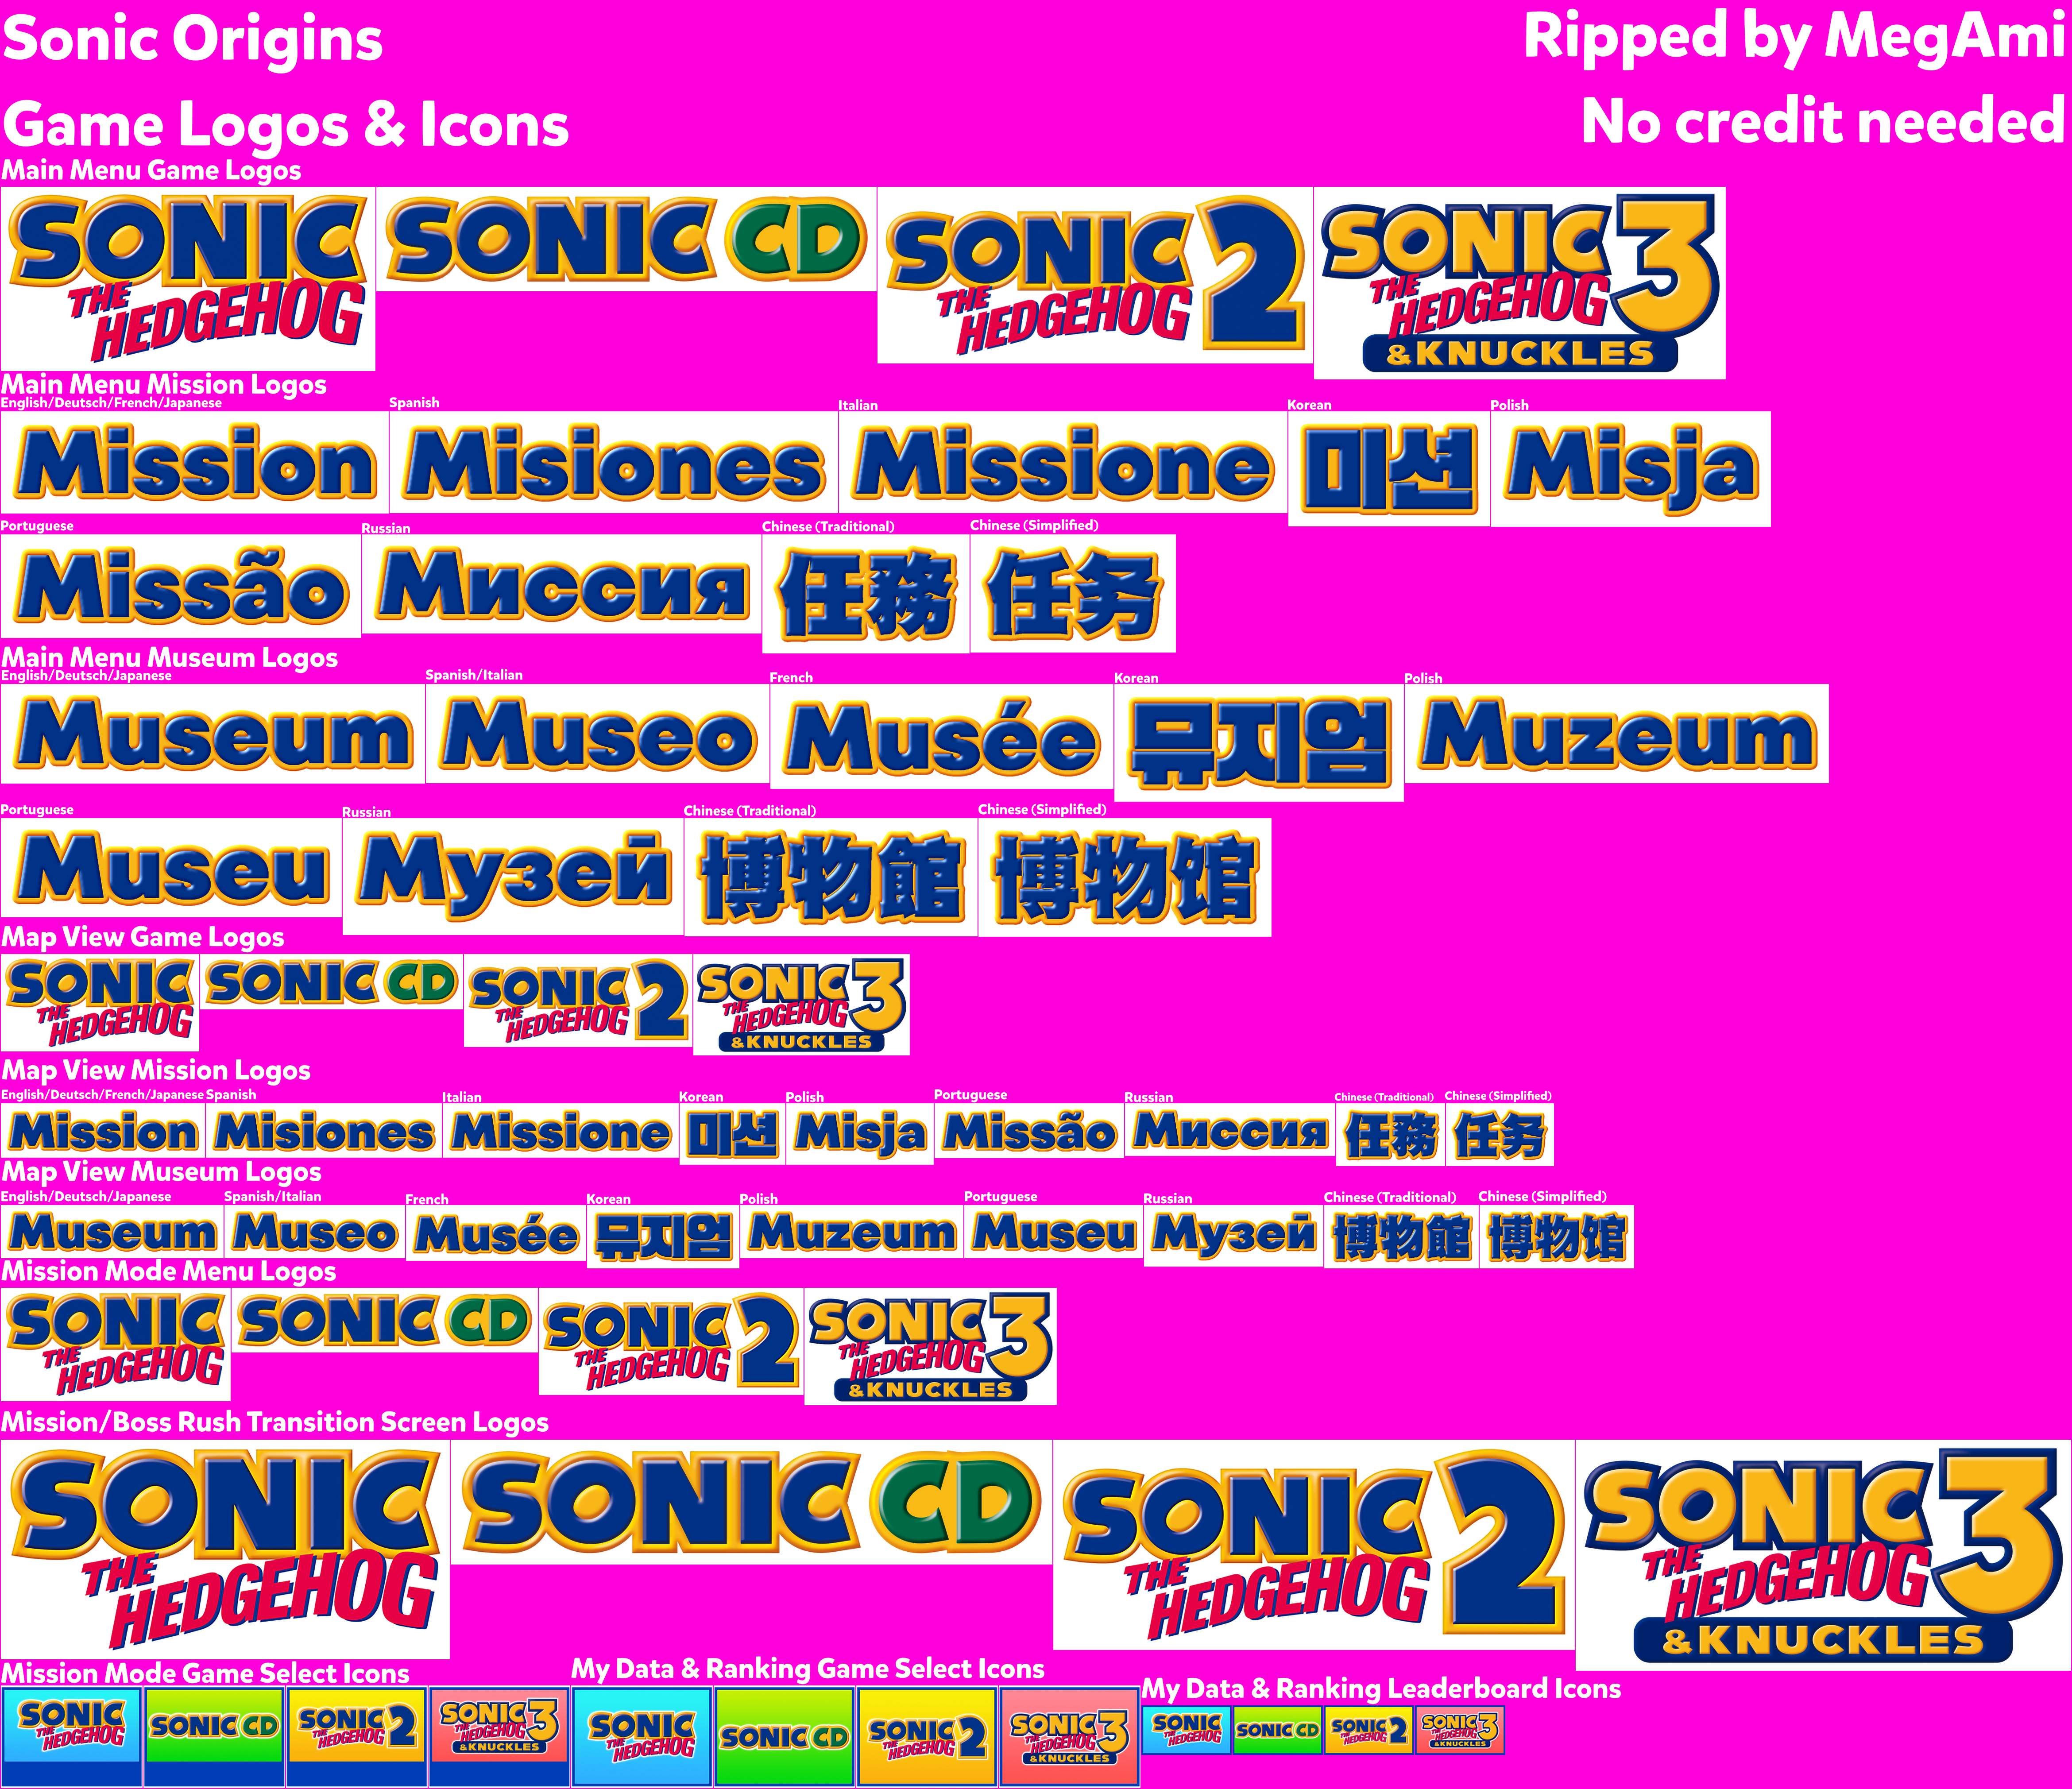 Sonic Origins - Game Logos & Icons